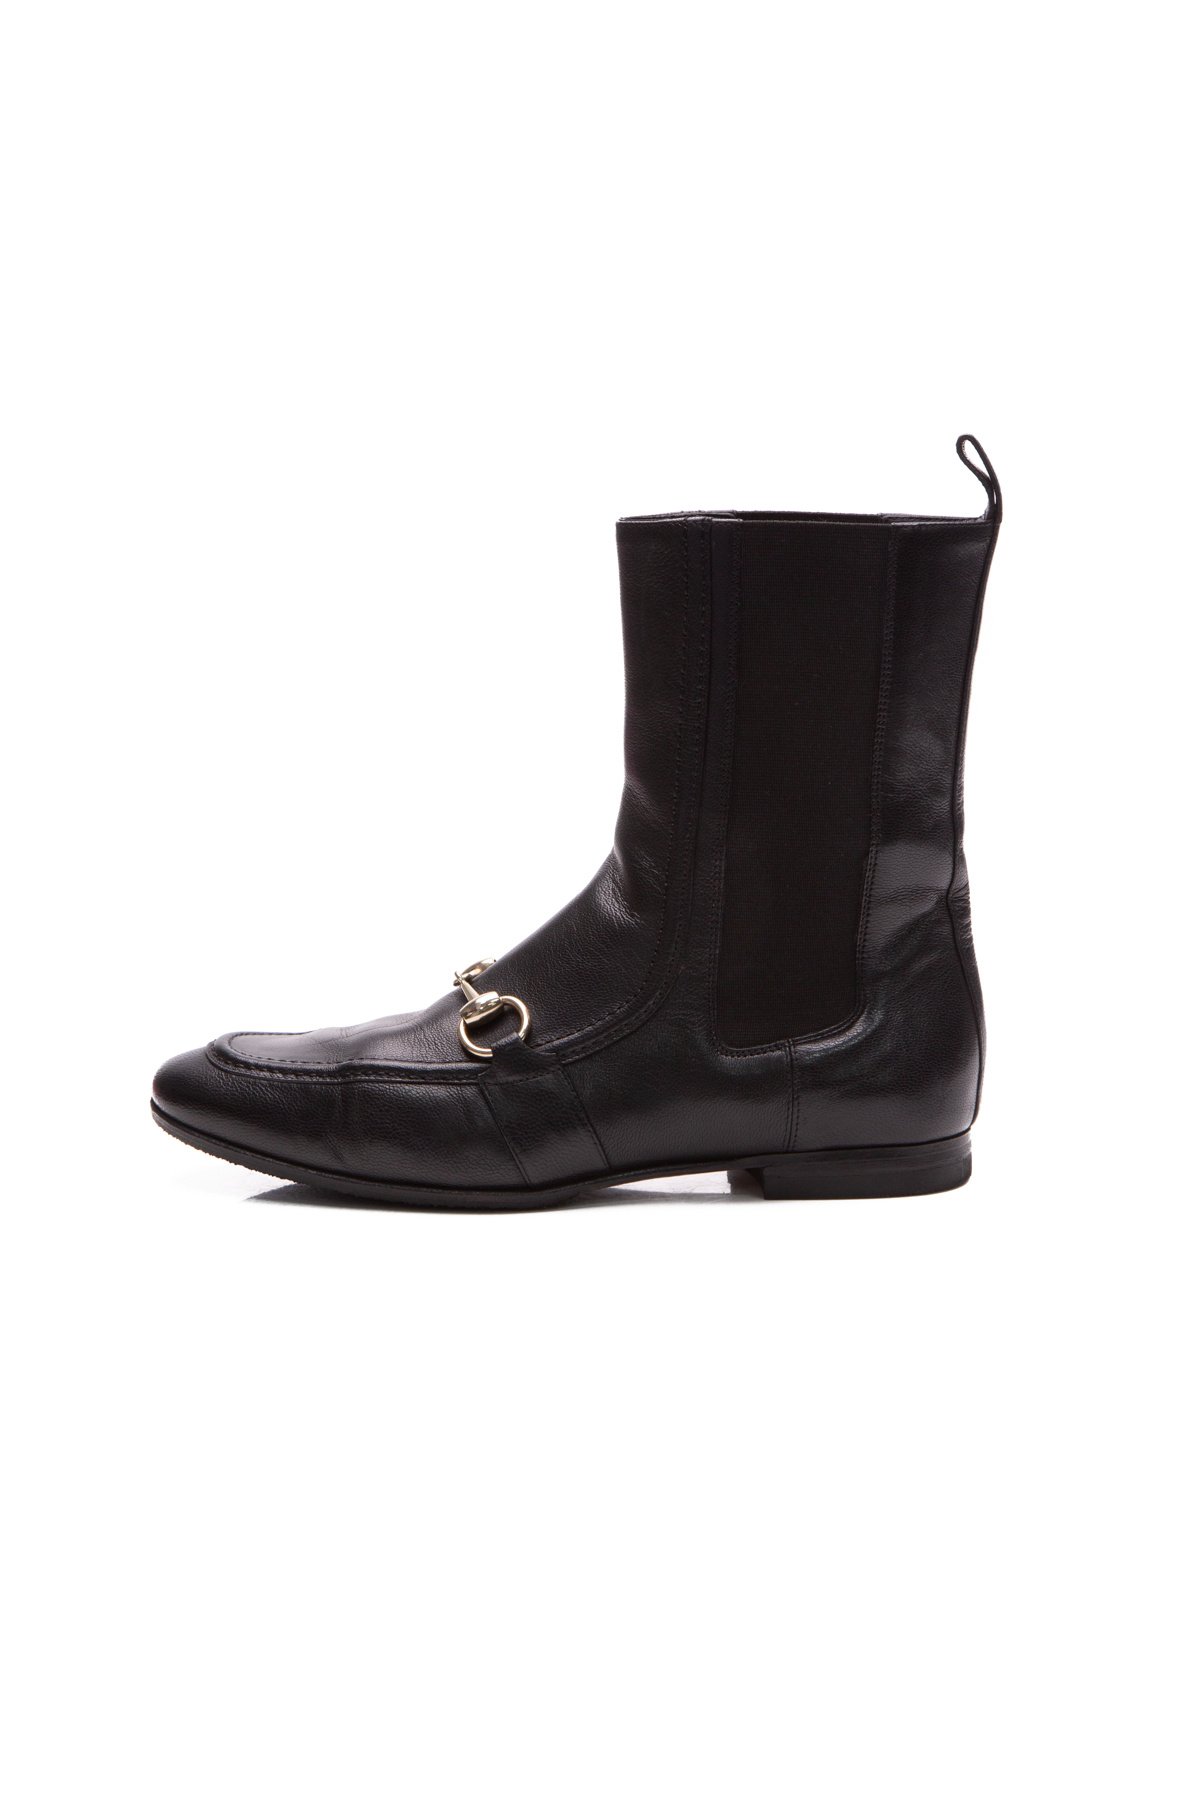 Louis Vuitton Territory Flat Half Boots Black 37 EU | 7 US